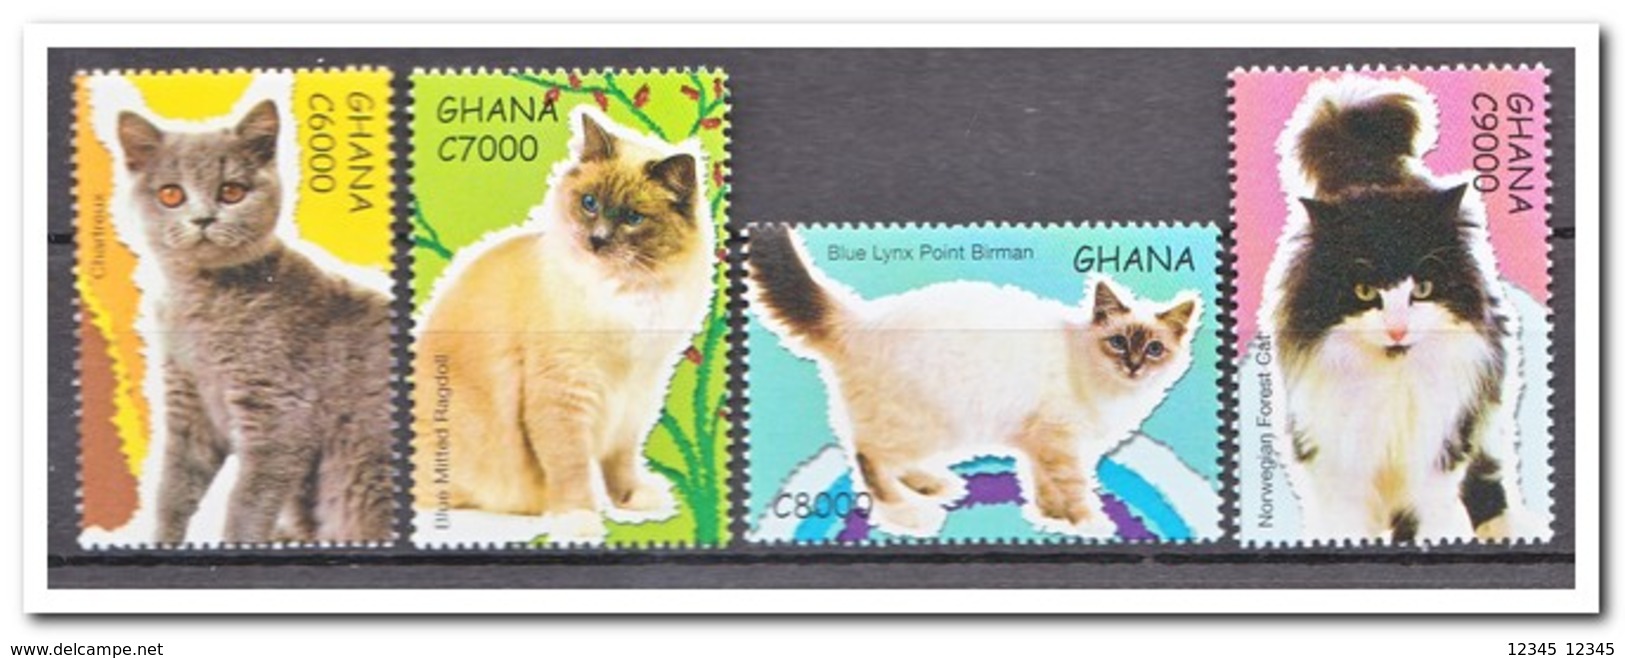 Ghana 2007, Postfris MNH, Cats - Ghana (1957-...)